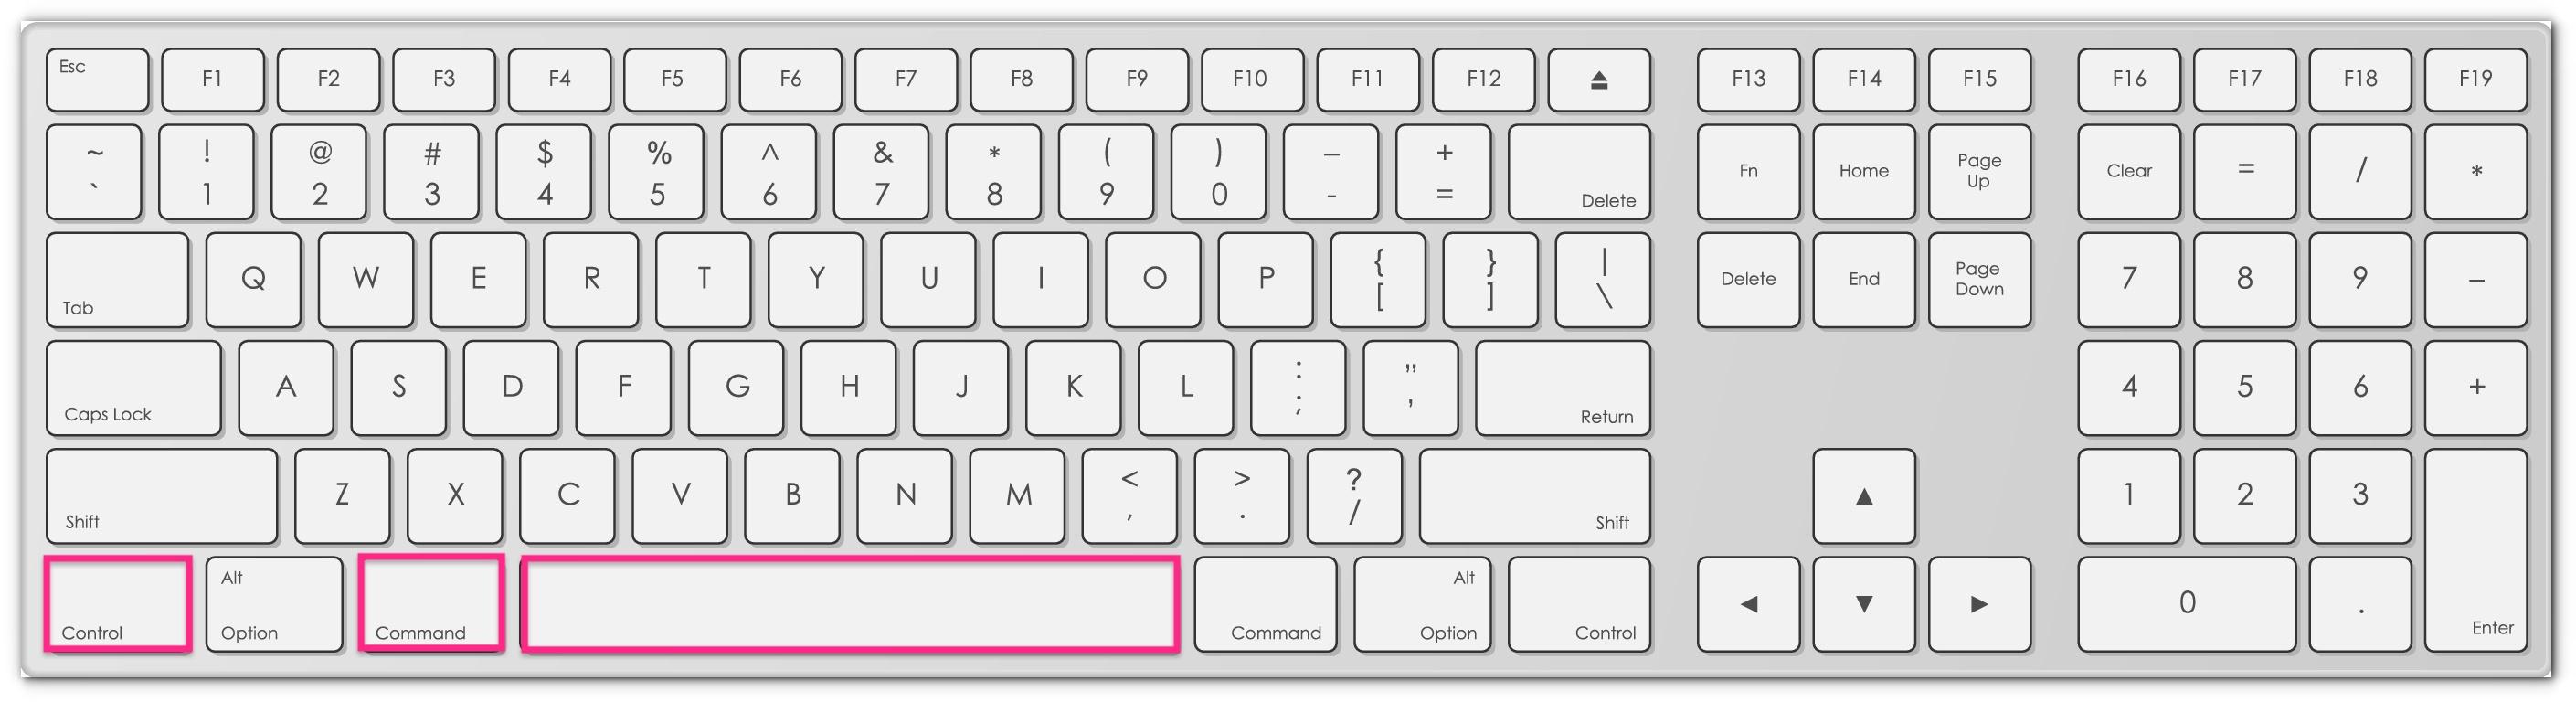 emoji keyboard for mac comman control spacebar not working